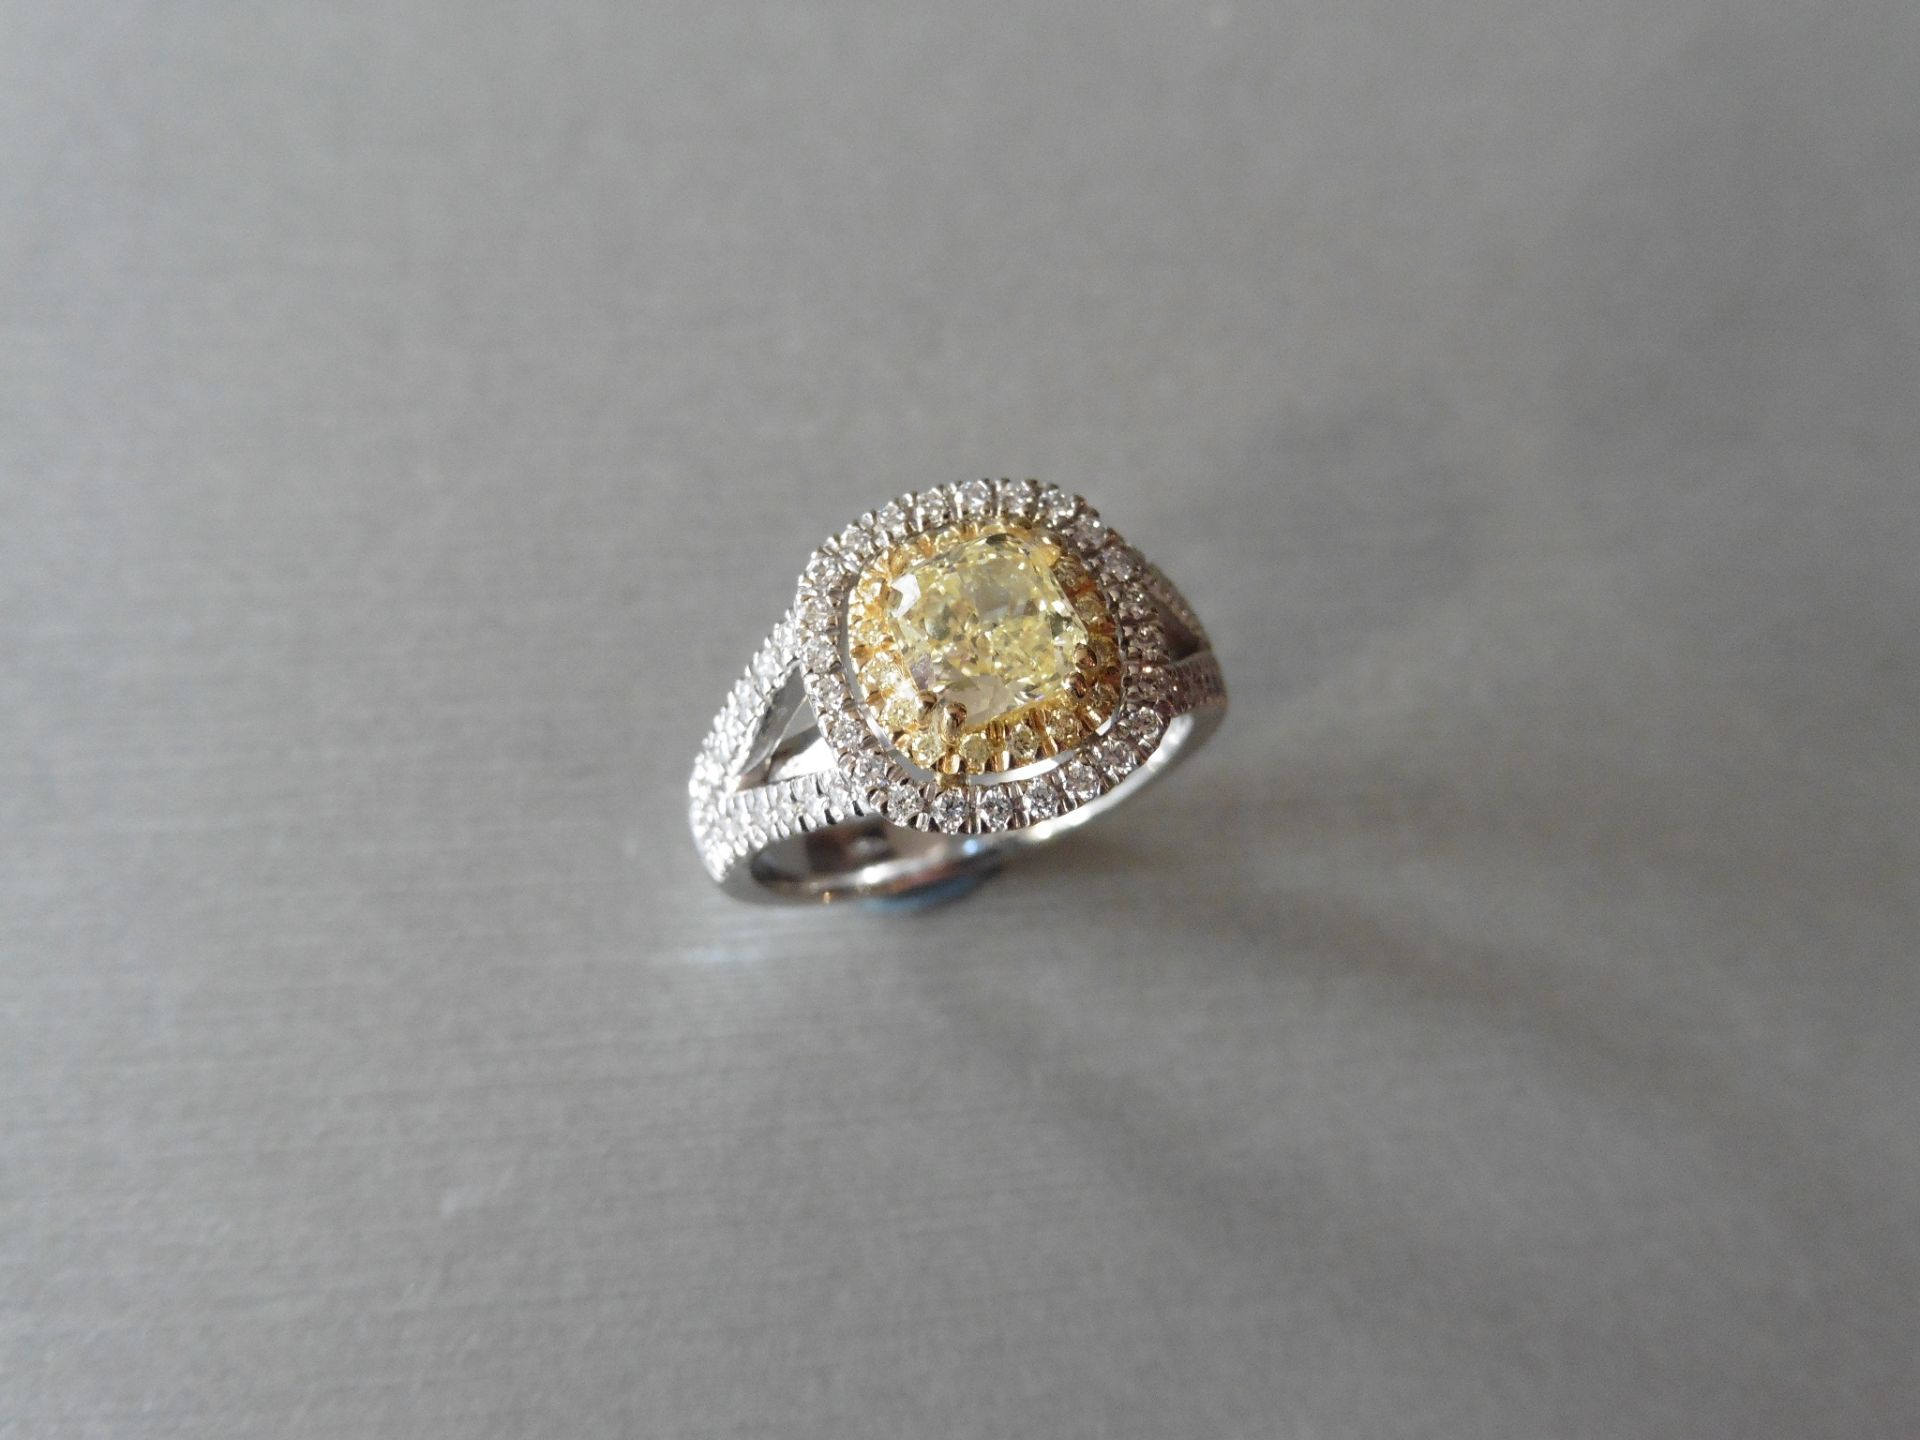 18ct white gold diamond set ring with a 1.02ct cushion cut yellow diamond, si1 clarity ( GIA